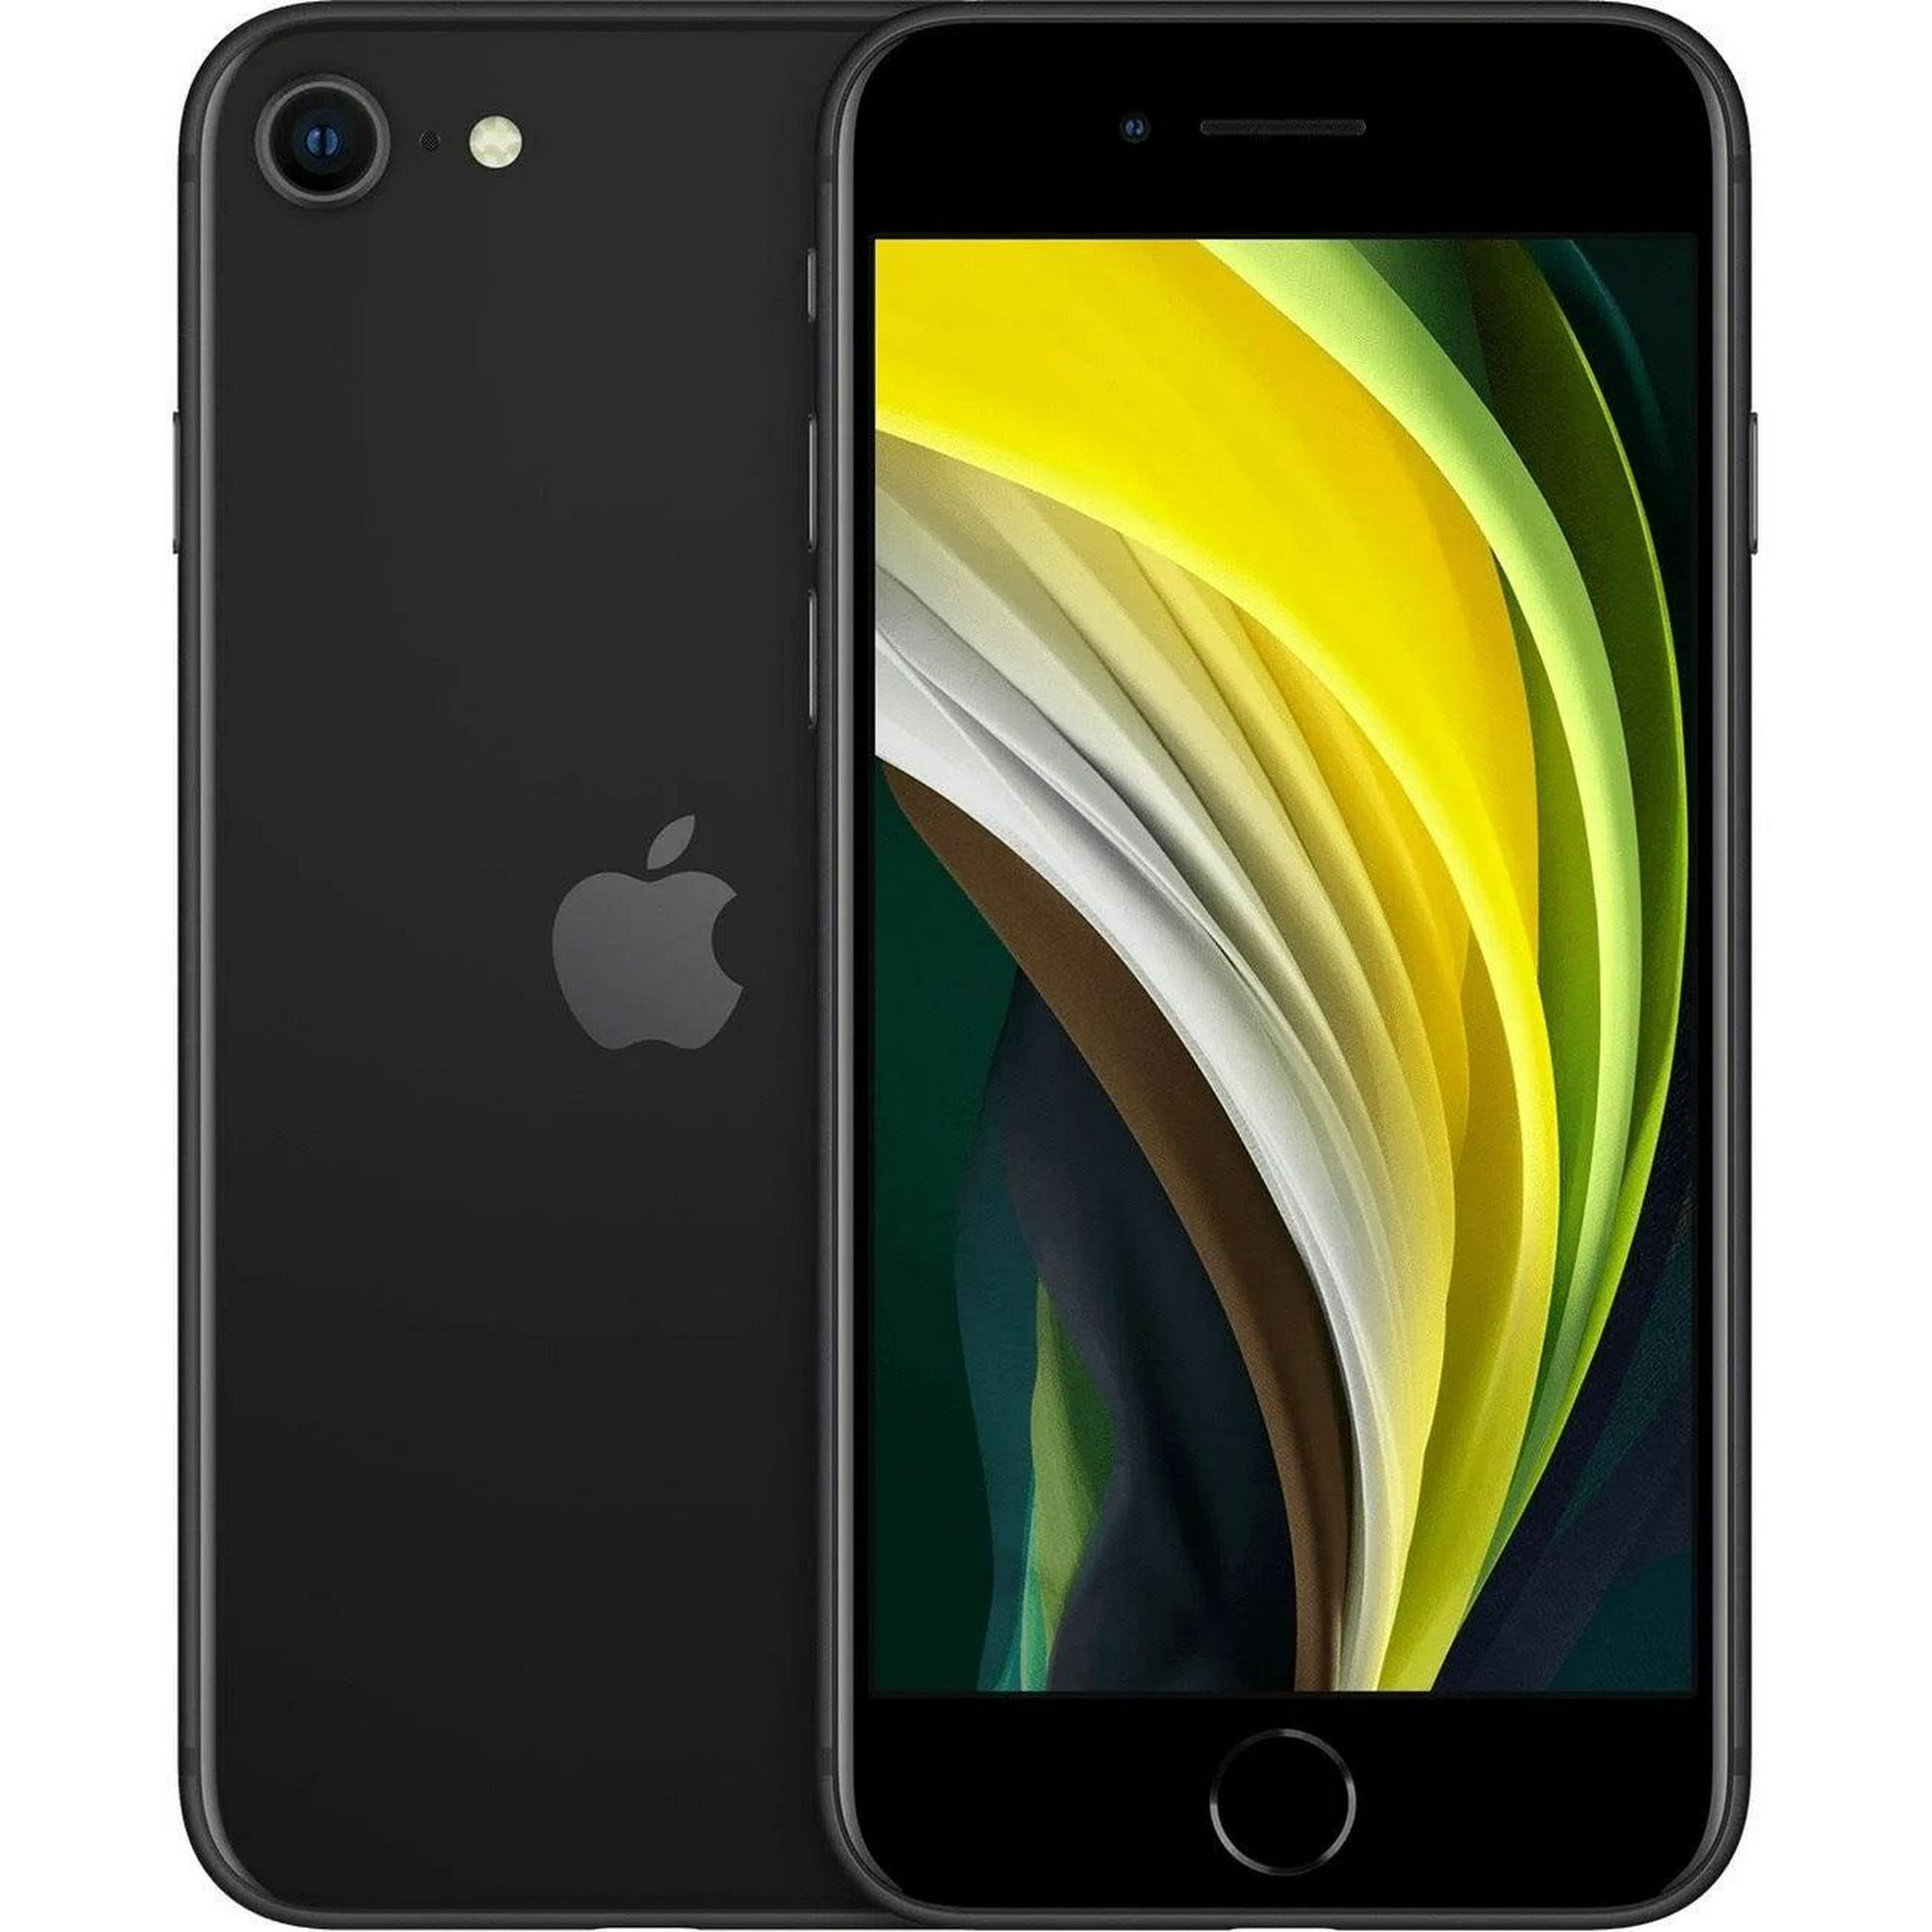 iPhone 12 64GB Morado Reacondicionado Grado A + Trípode